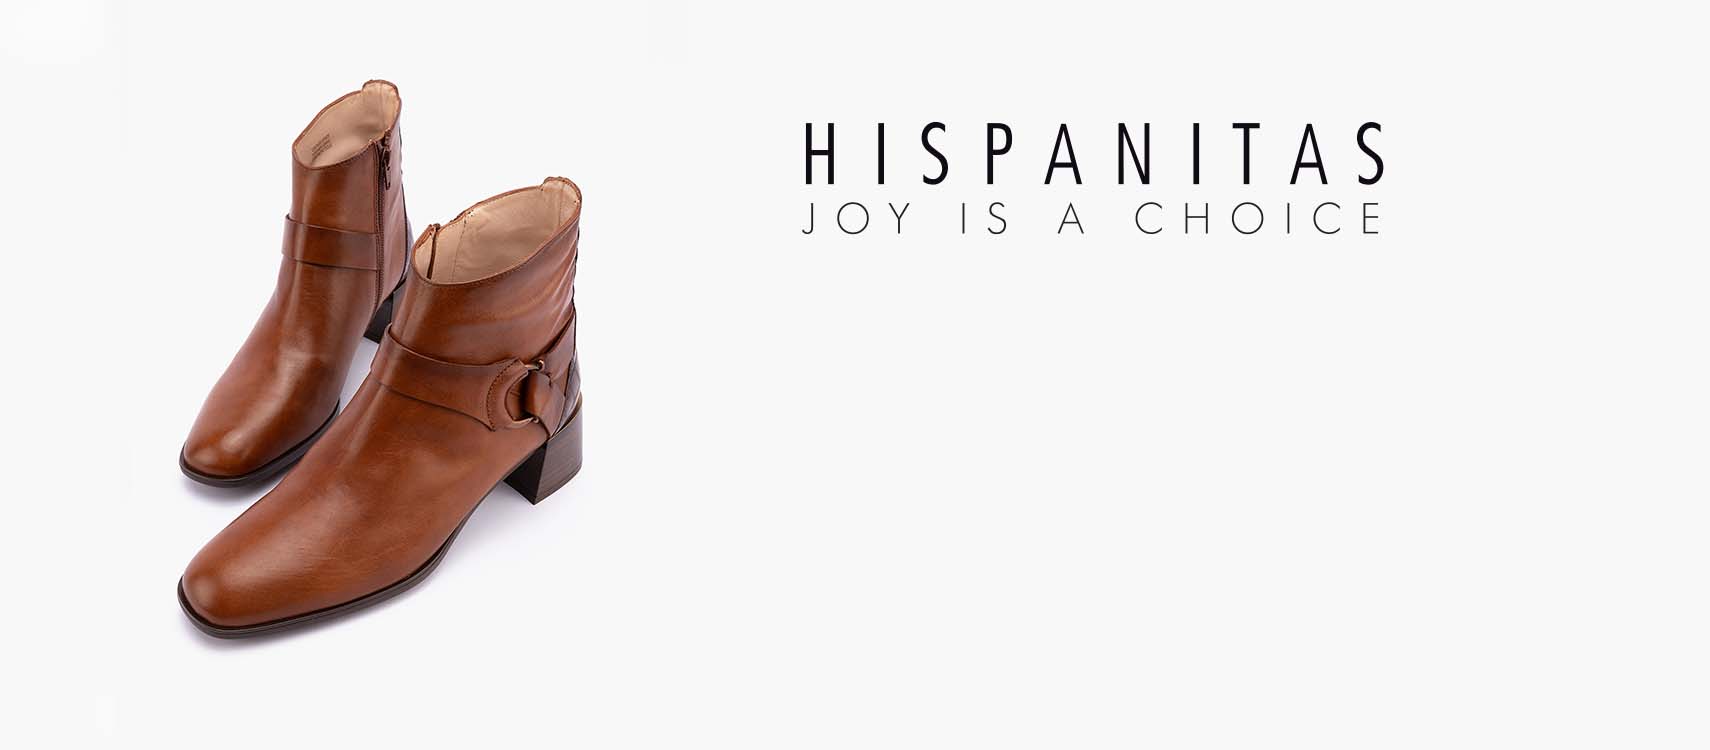 Spanish Shoes By Hispanitas